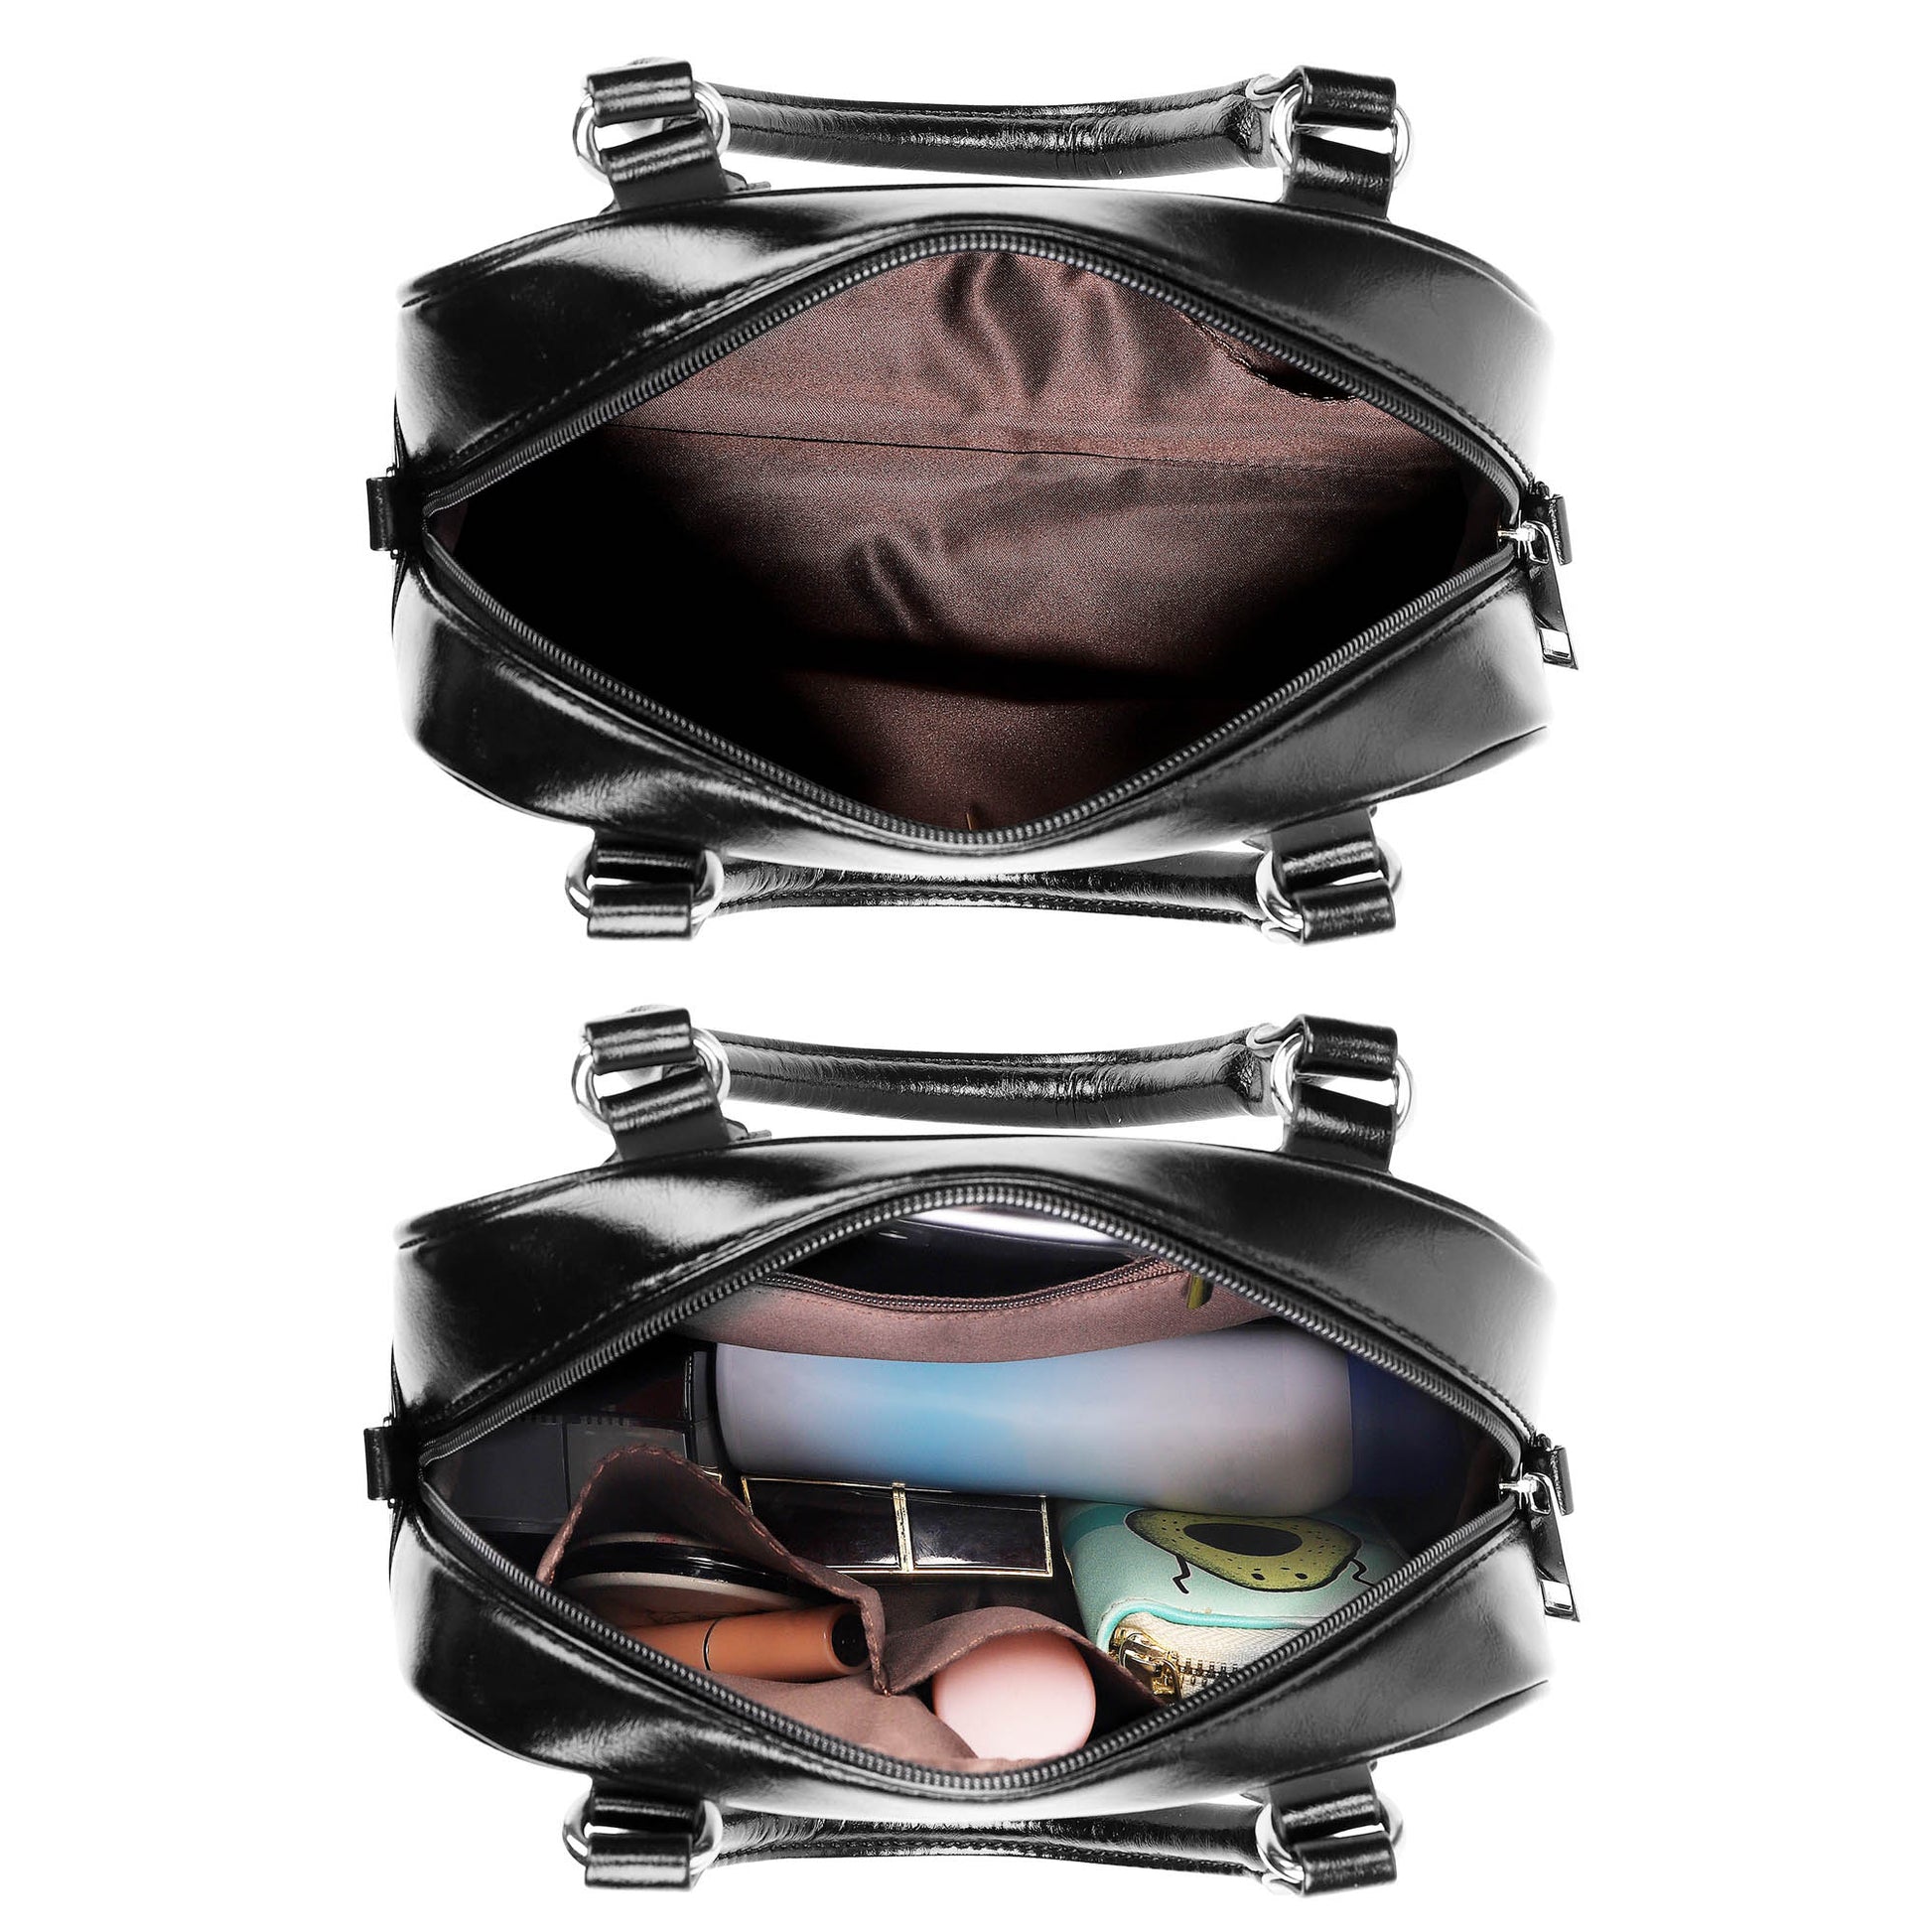 McCoy Ancient Tartan Shoulder Handbags with Family Crest - Tartanvibesclothing